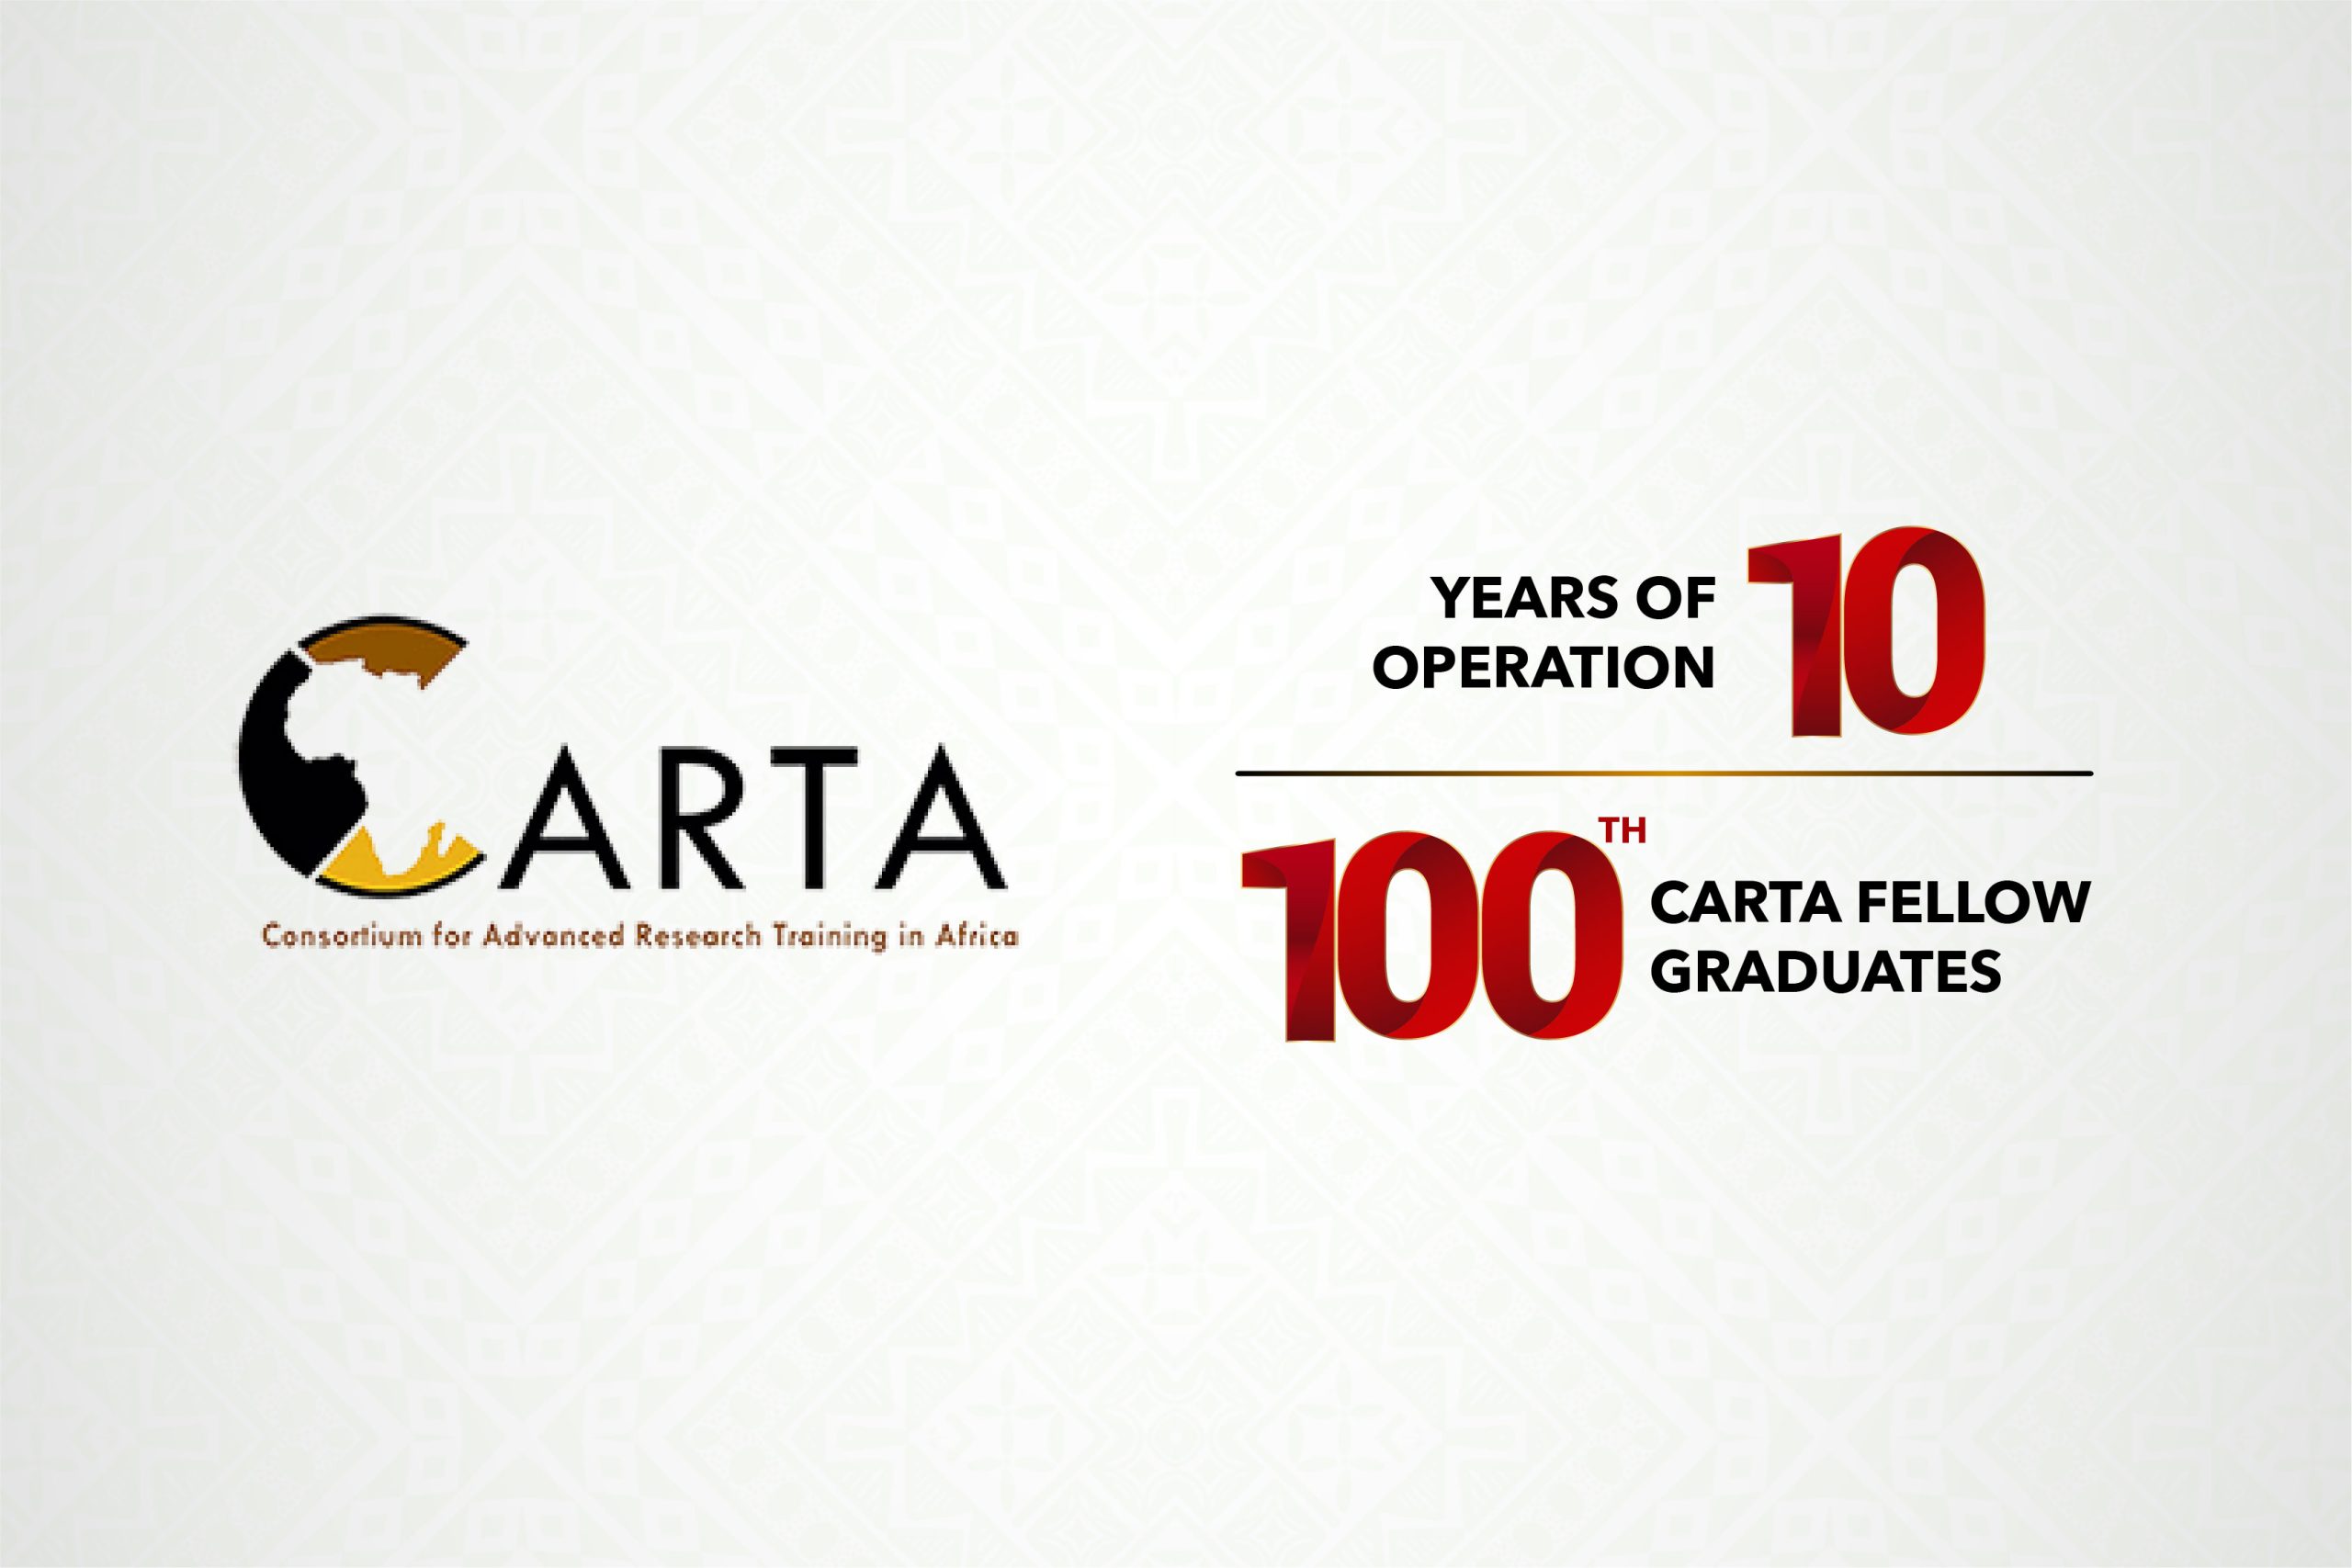 The CARTA Program hit the ten-year milestone and clocked 100 graduates